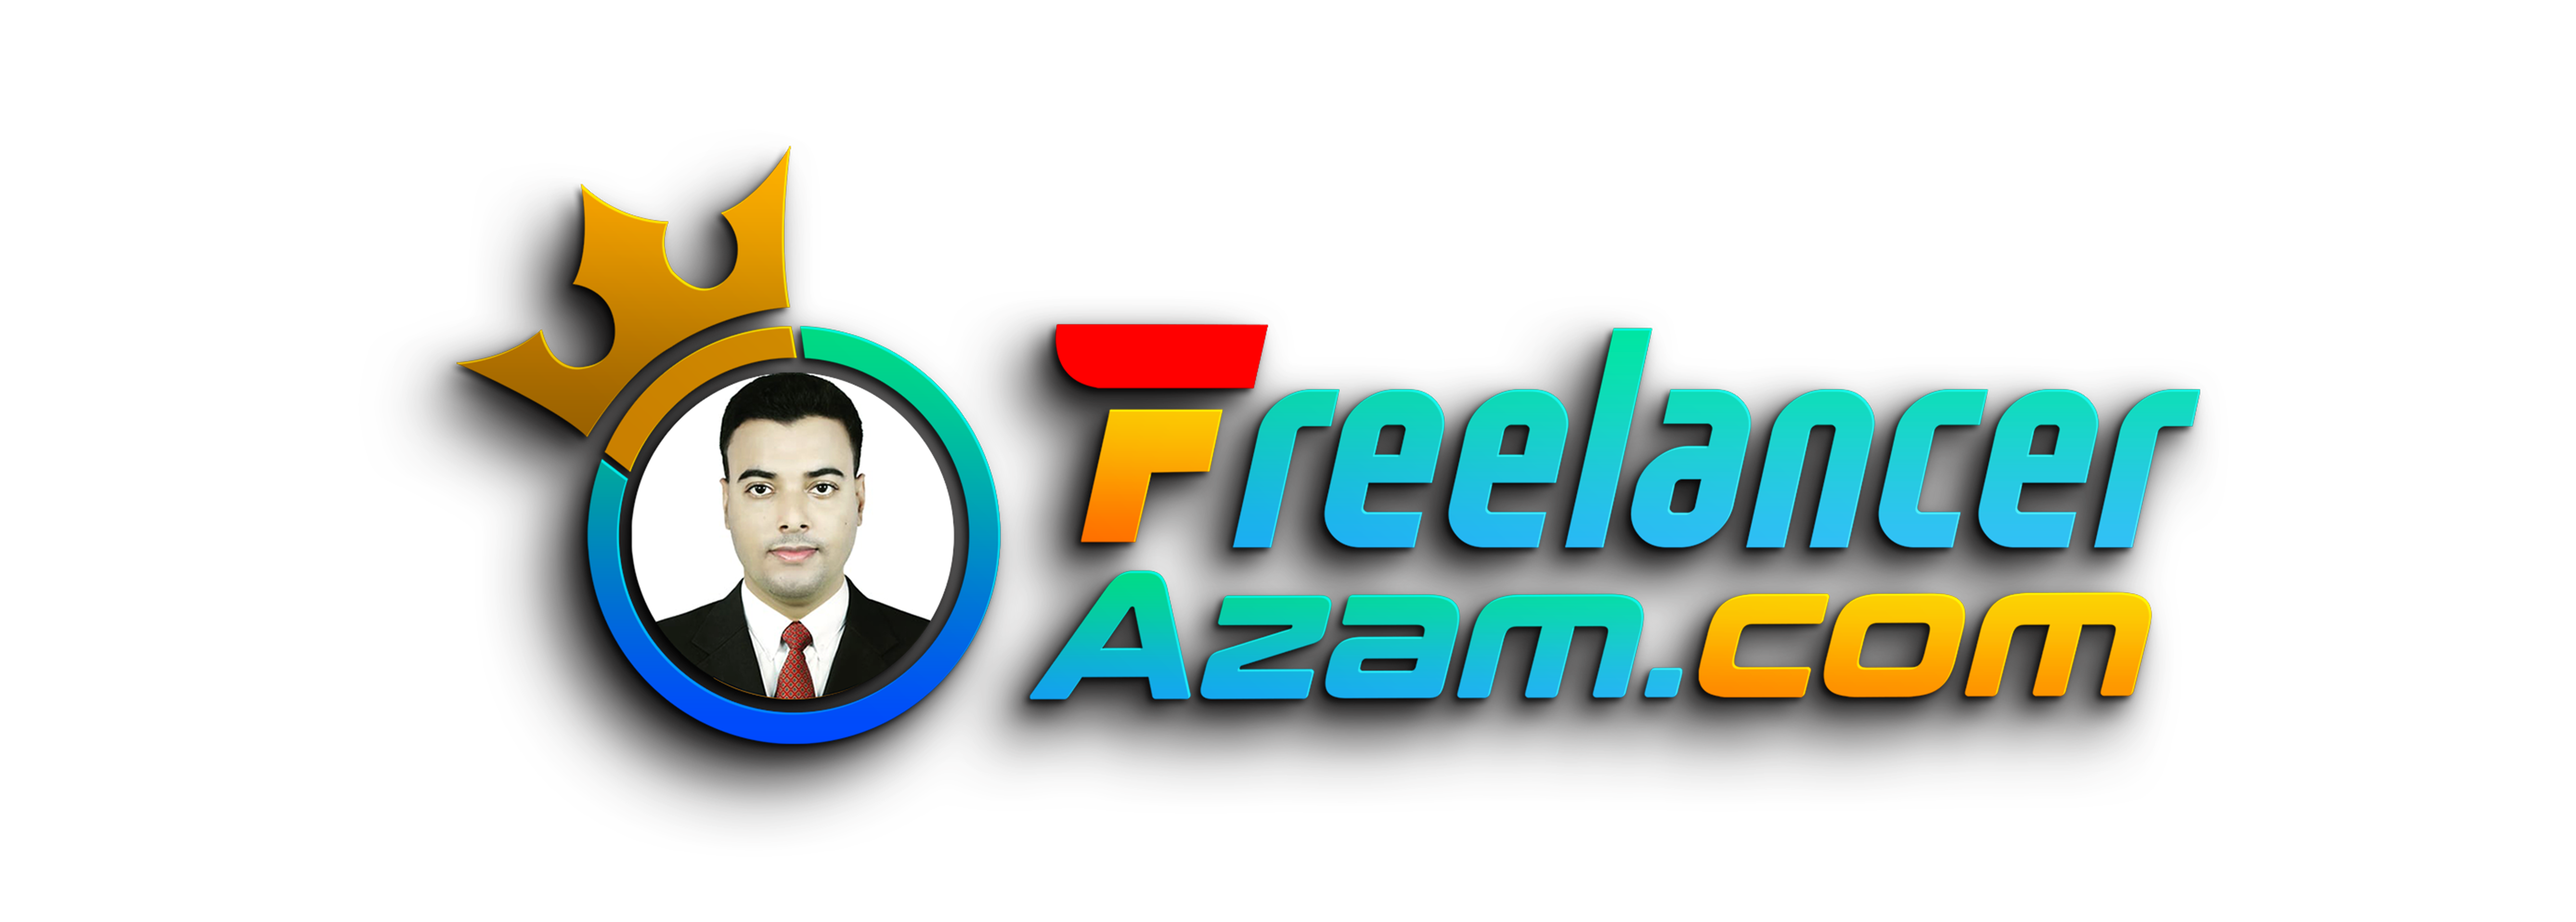 Freelancerazam